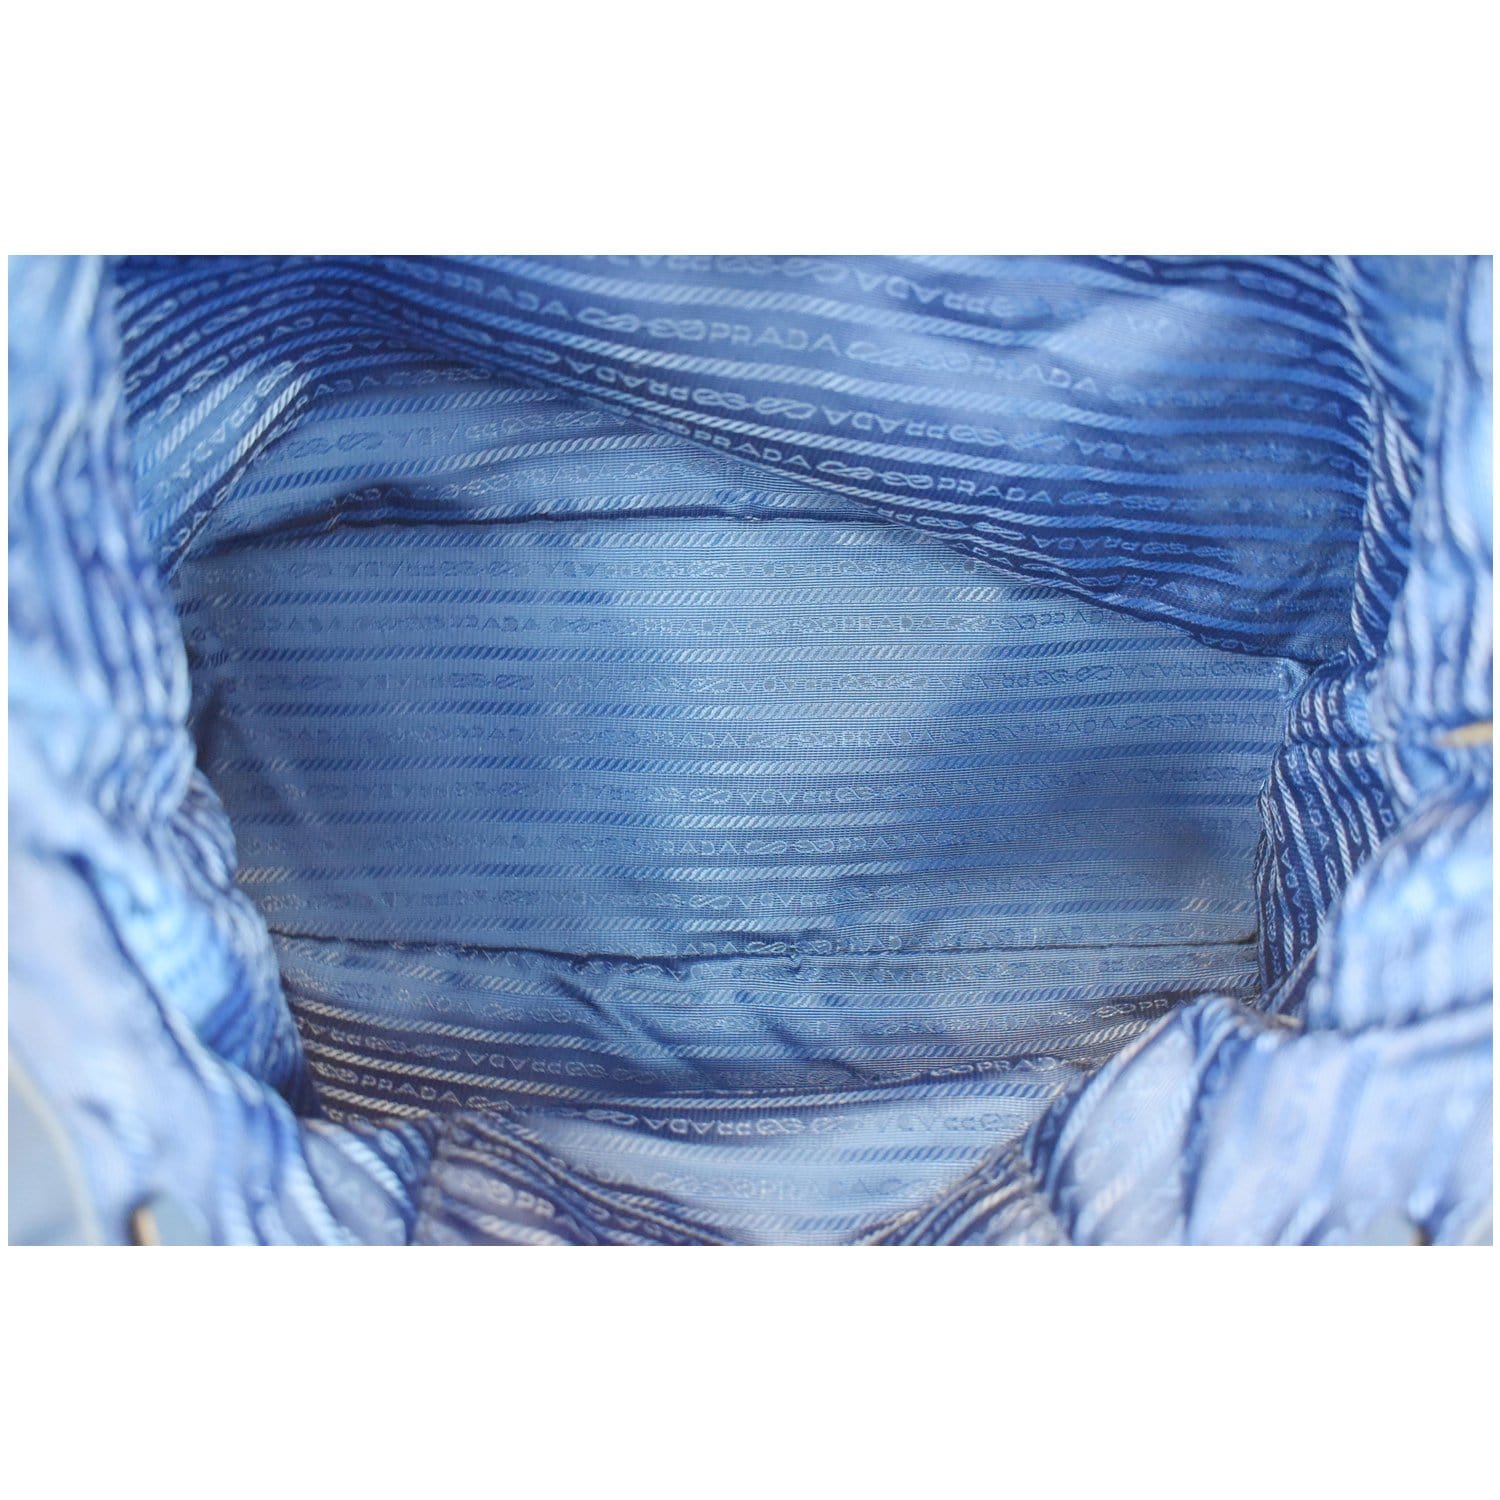 Prada Tessuto Clutch Saffiano Nylon Navy Blue in Leather/Nylon